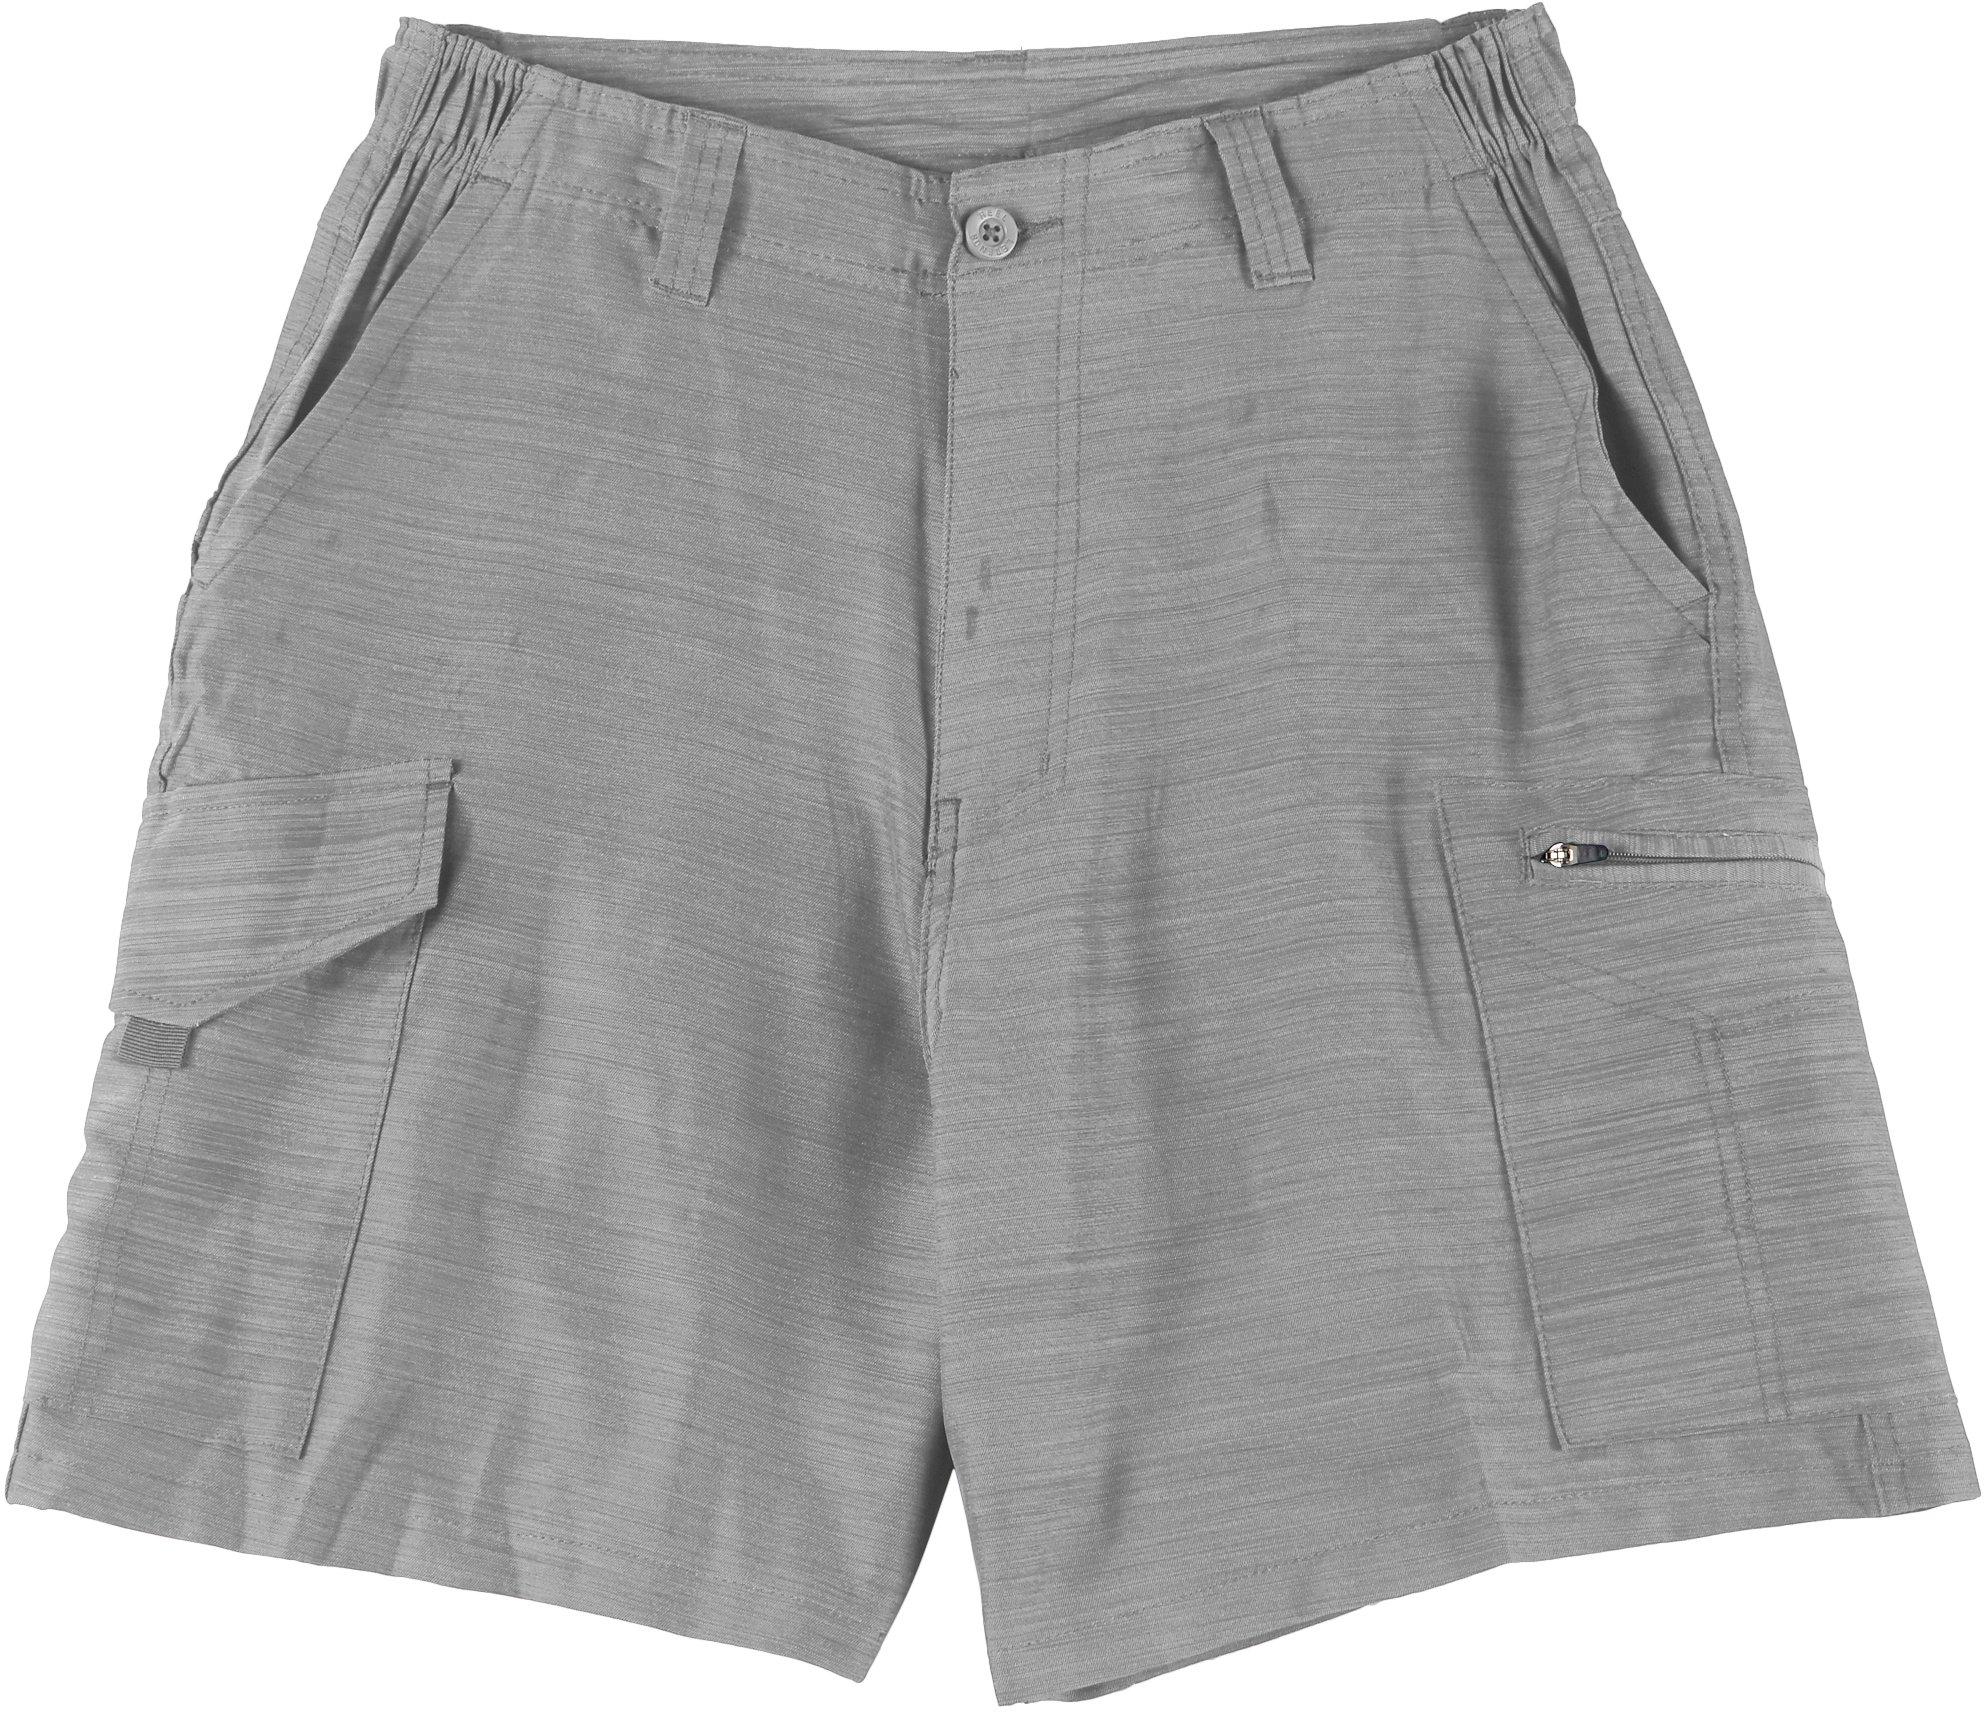 Reel Legends Mens Mackerel Quick Dry Cargo Shorts - Grey - Small